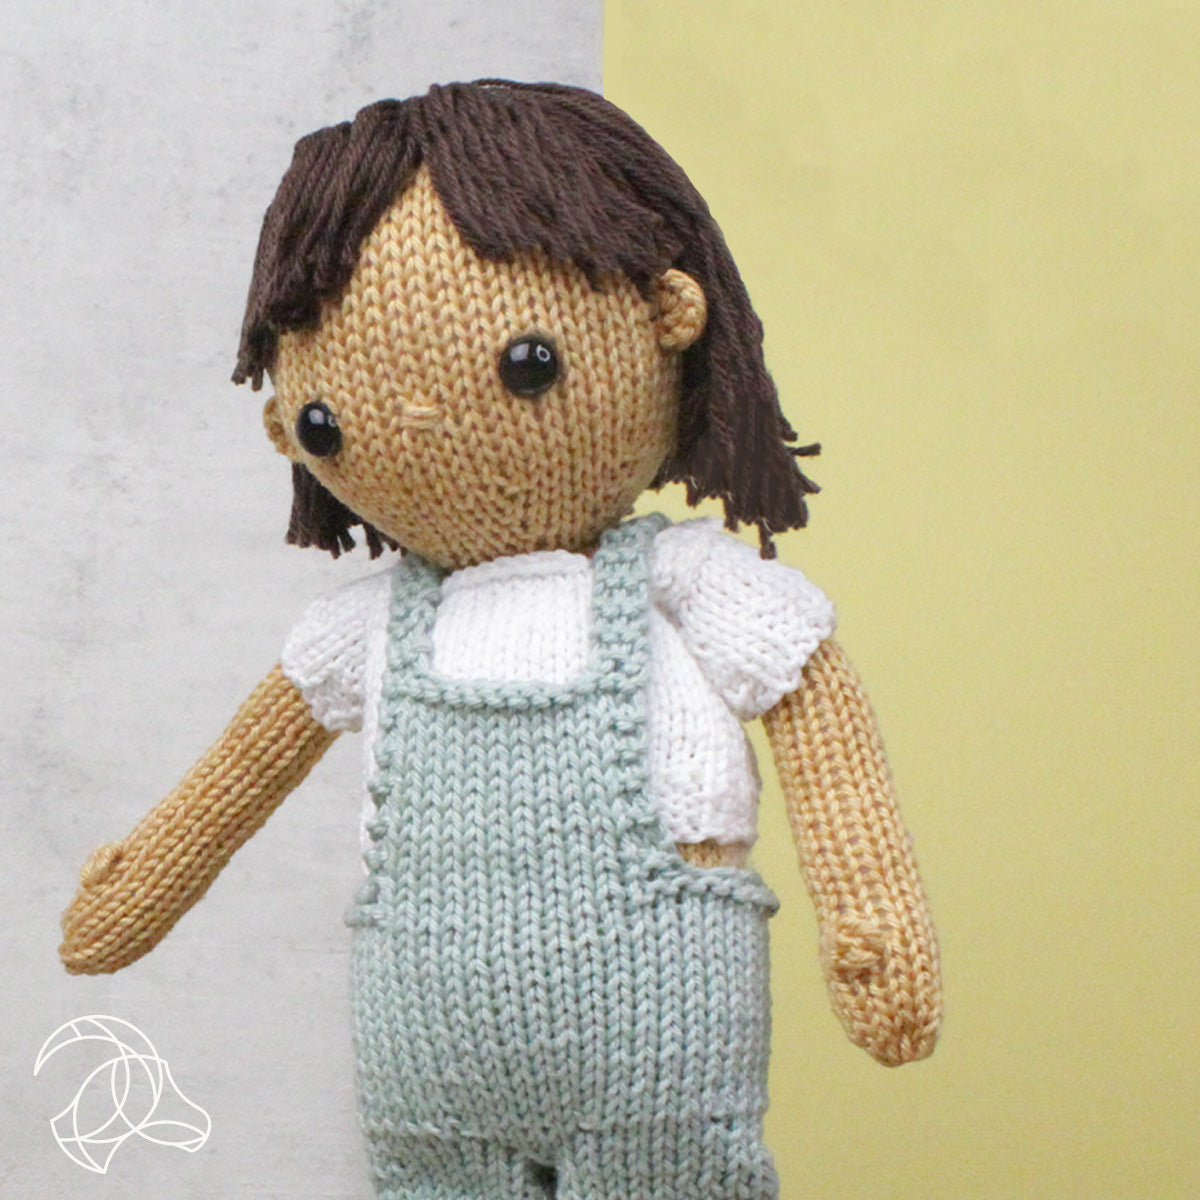 Little Girl Dolly in her Dungarees - Knitting Kit